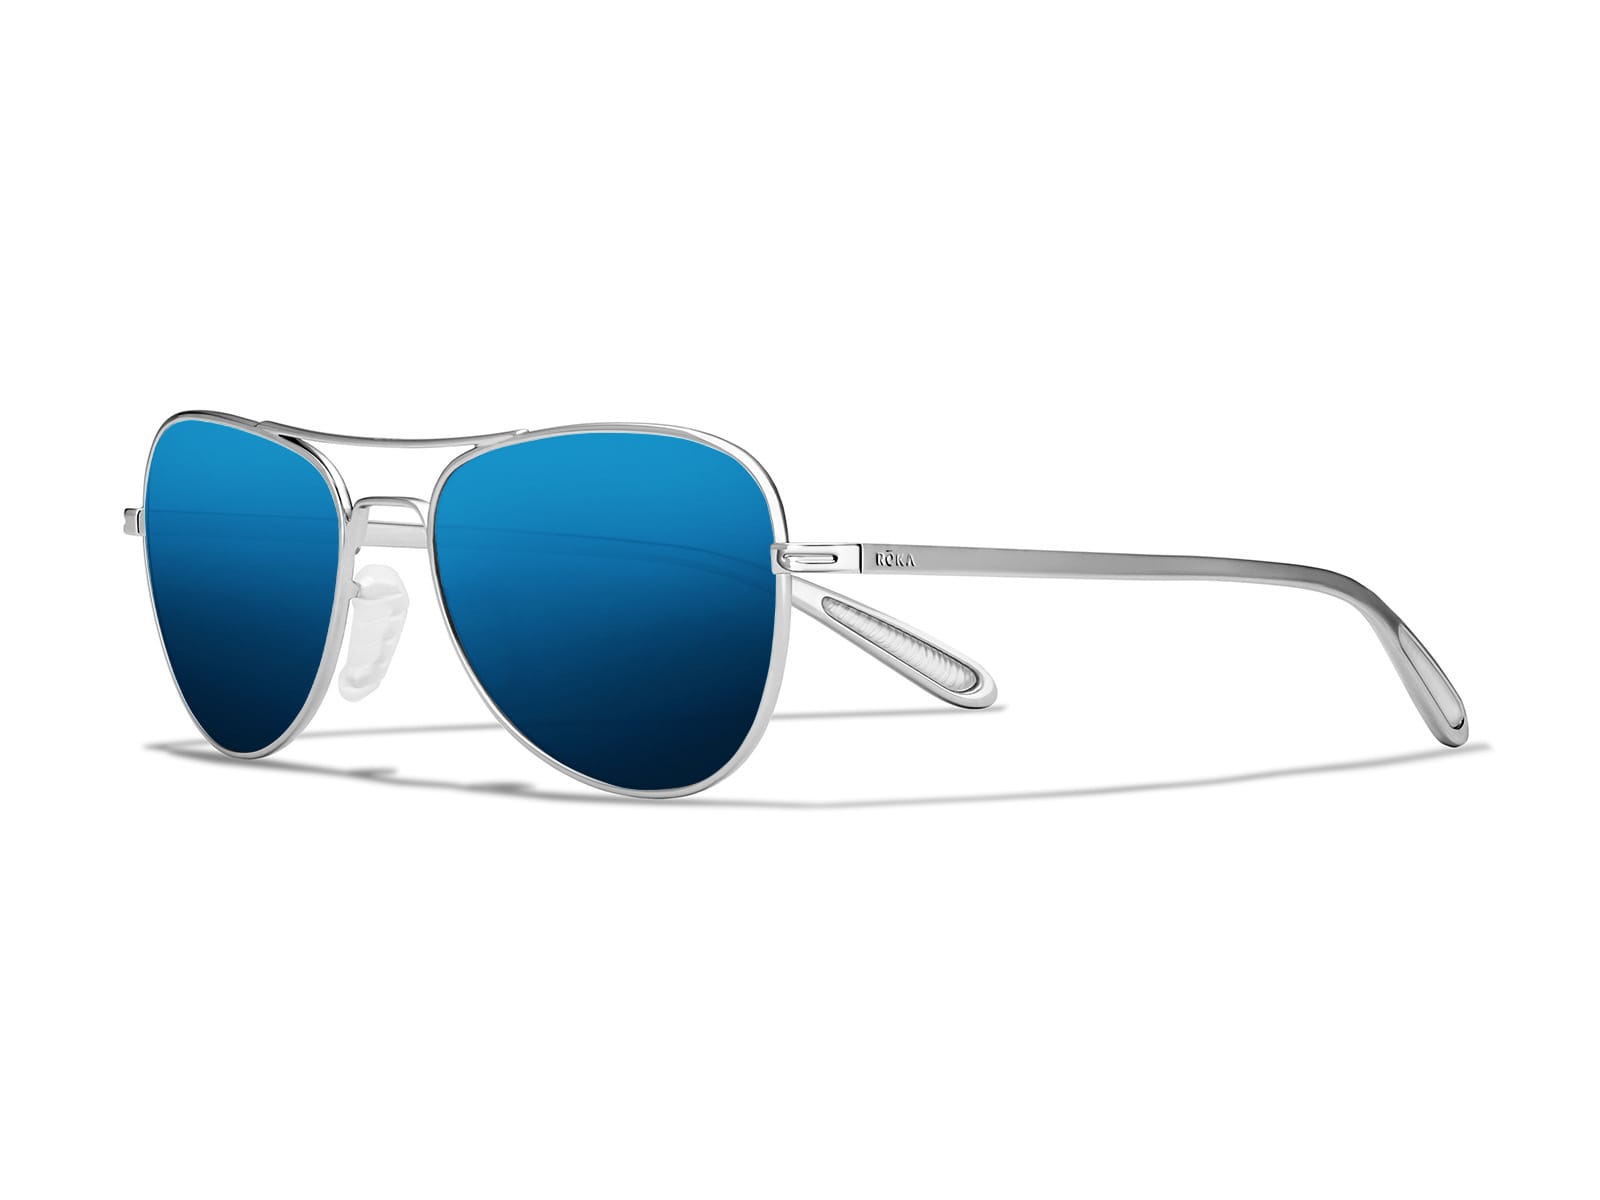 Small Aviators - Round Aviators - Most Comfortable Sunglasses | ROKA